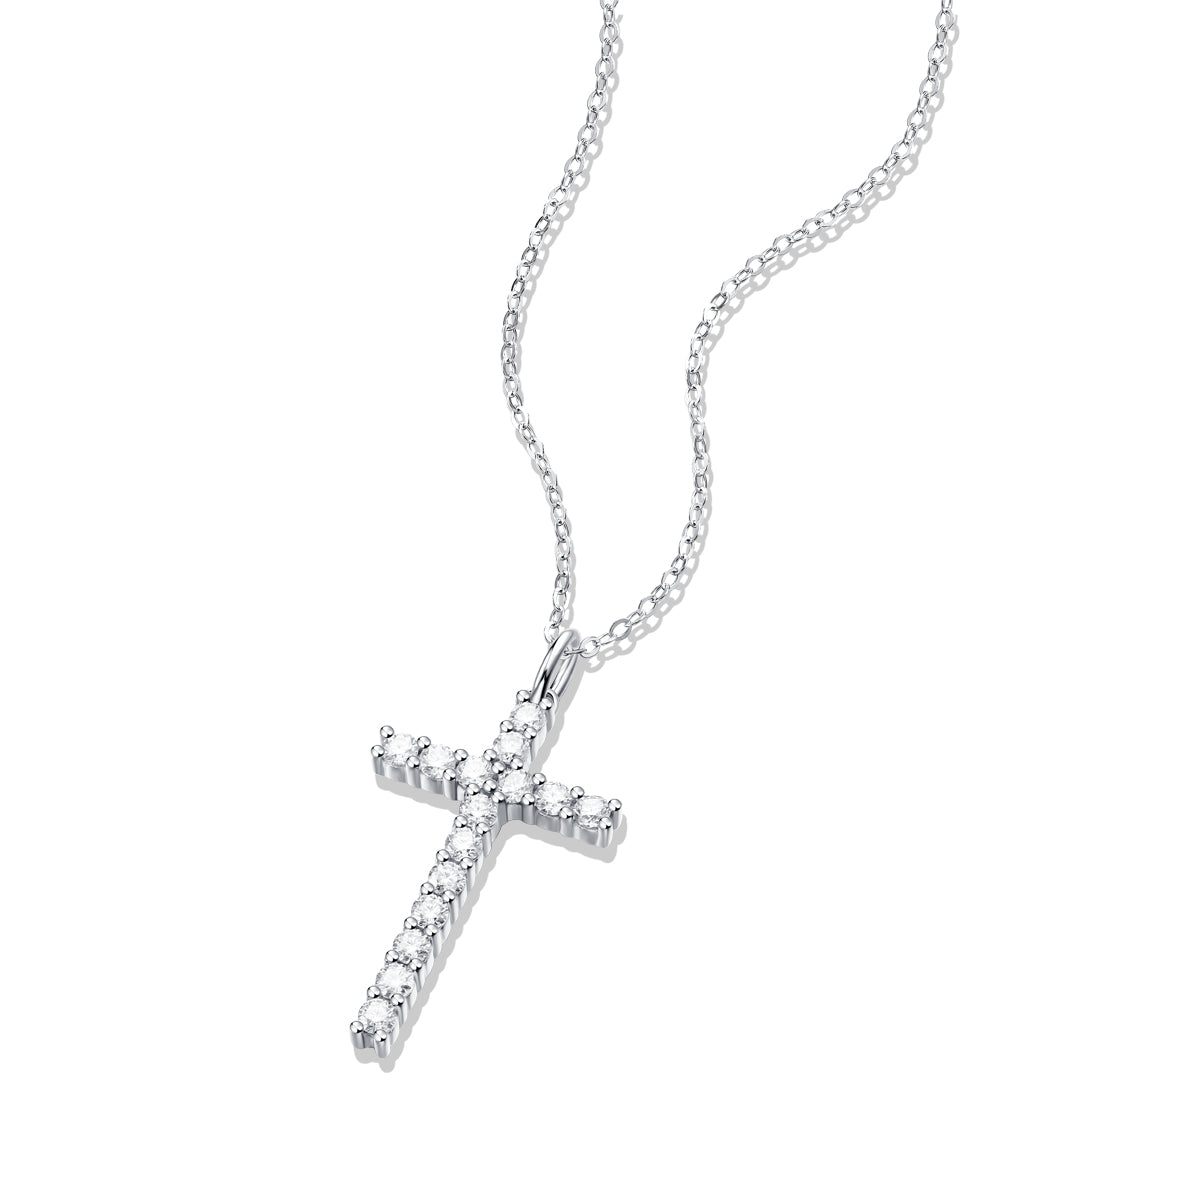 Adjustable Moissanite Faith Necklaces P11546